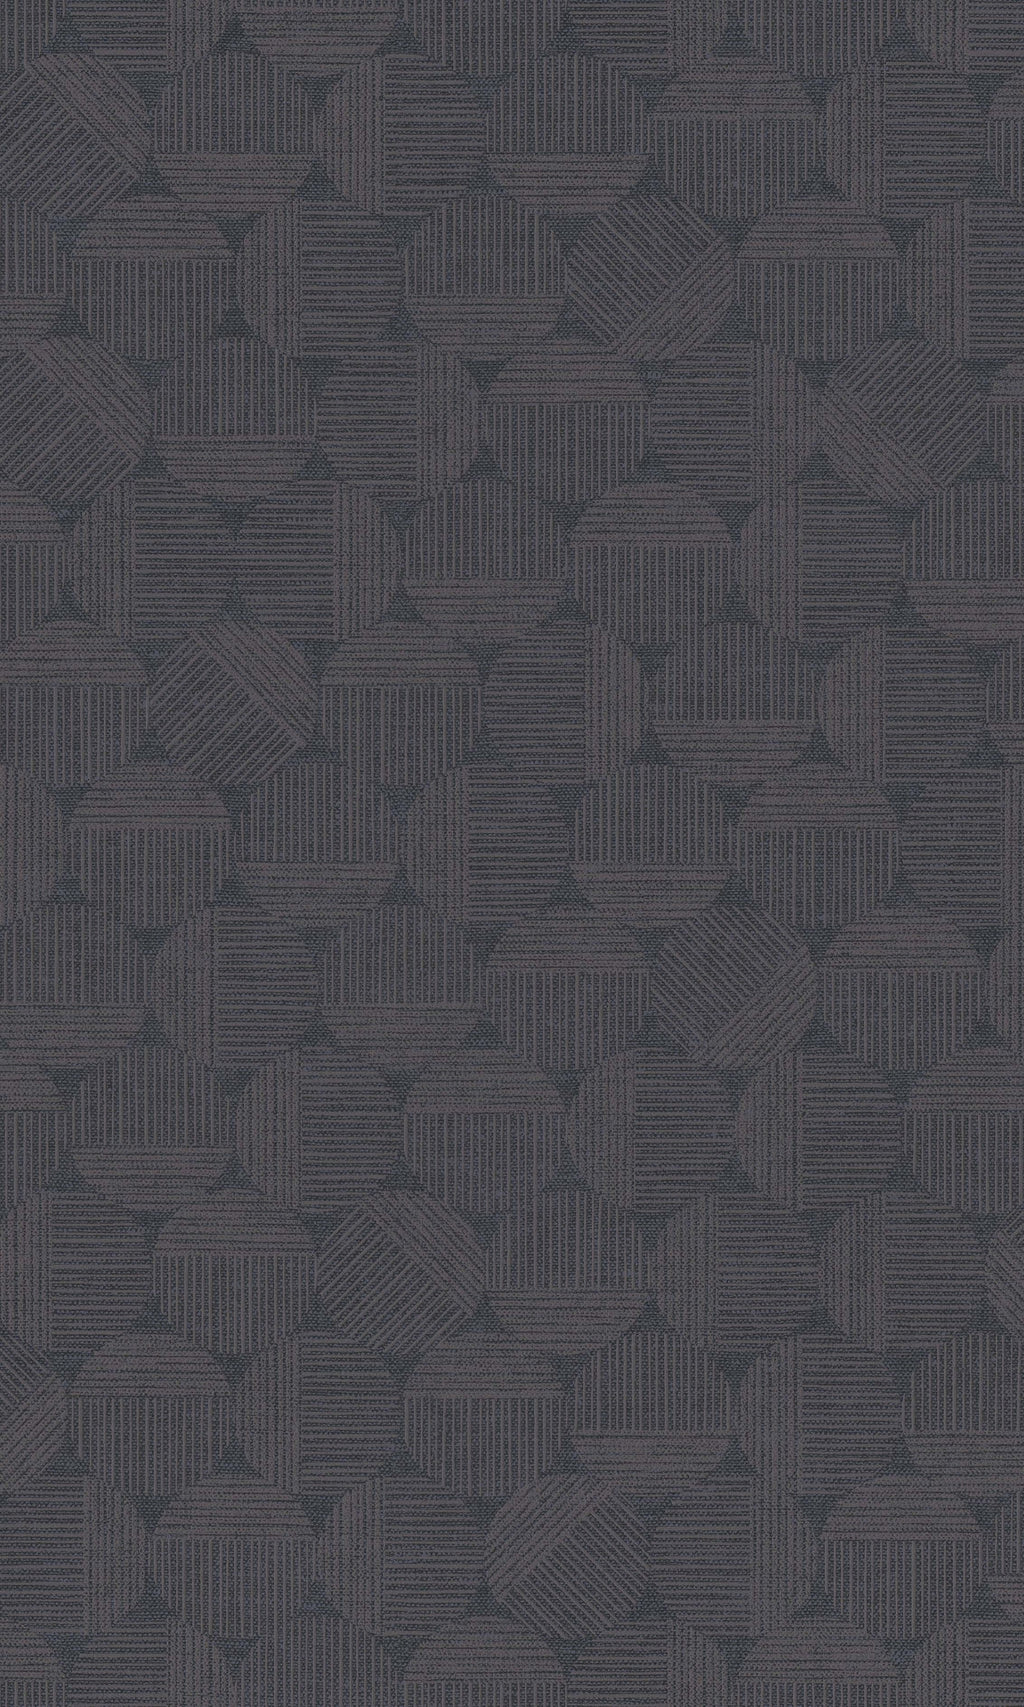 Anthracite Geometric Graphic Circles Wallpaper R8679